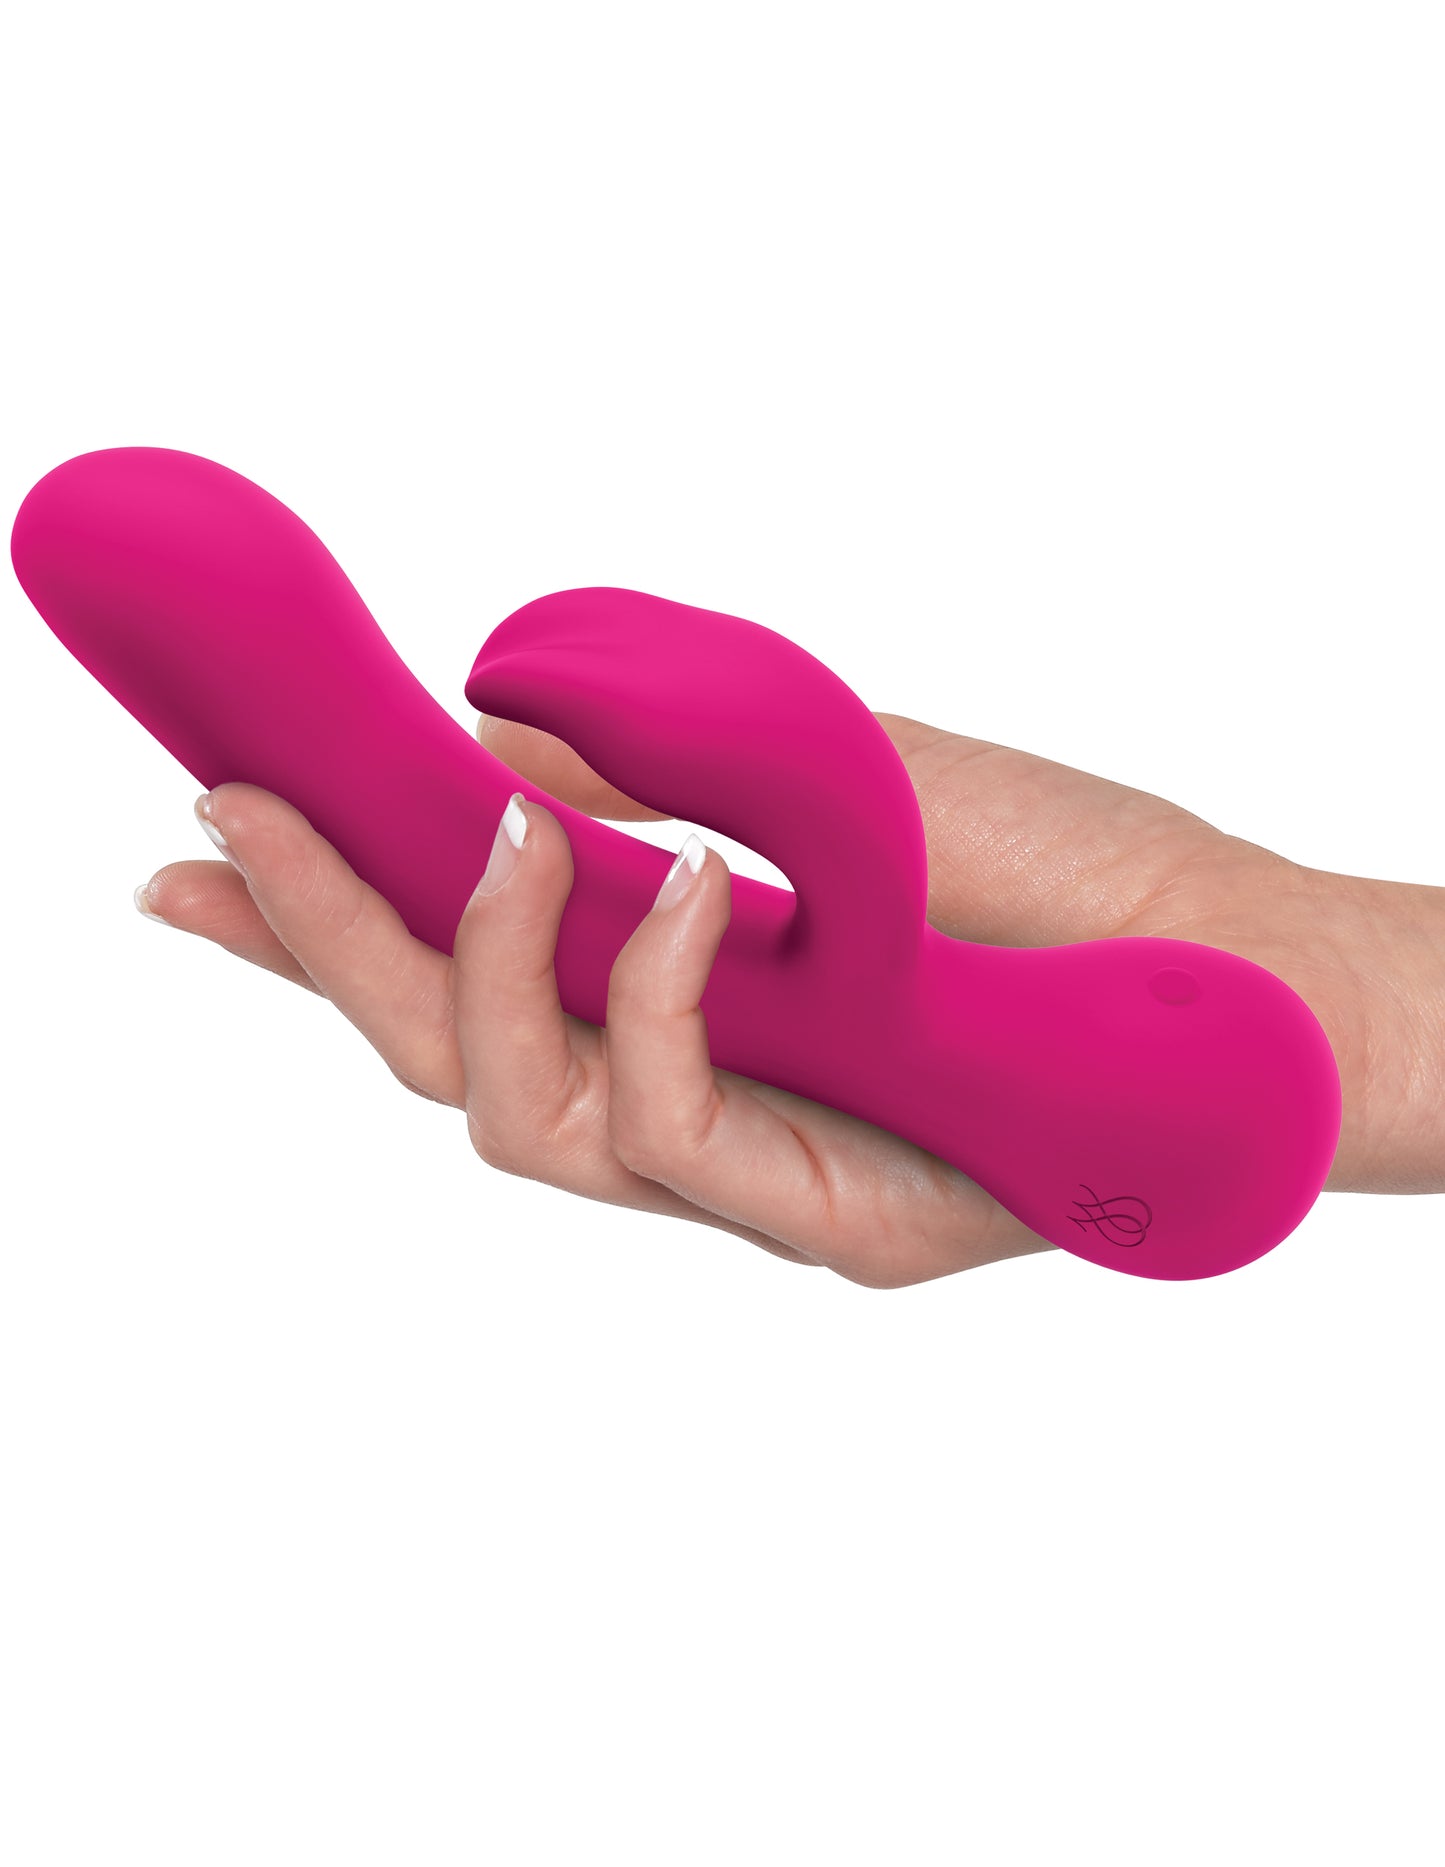 Rabbits - Ruby Rabbit Waterproof Flexible Vibrator by Jimmyjane